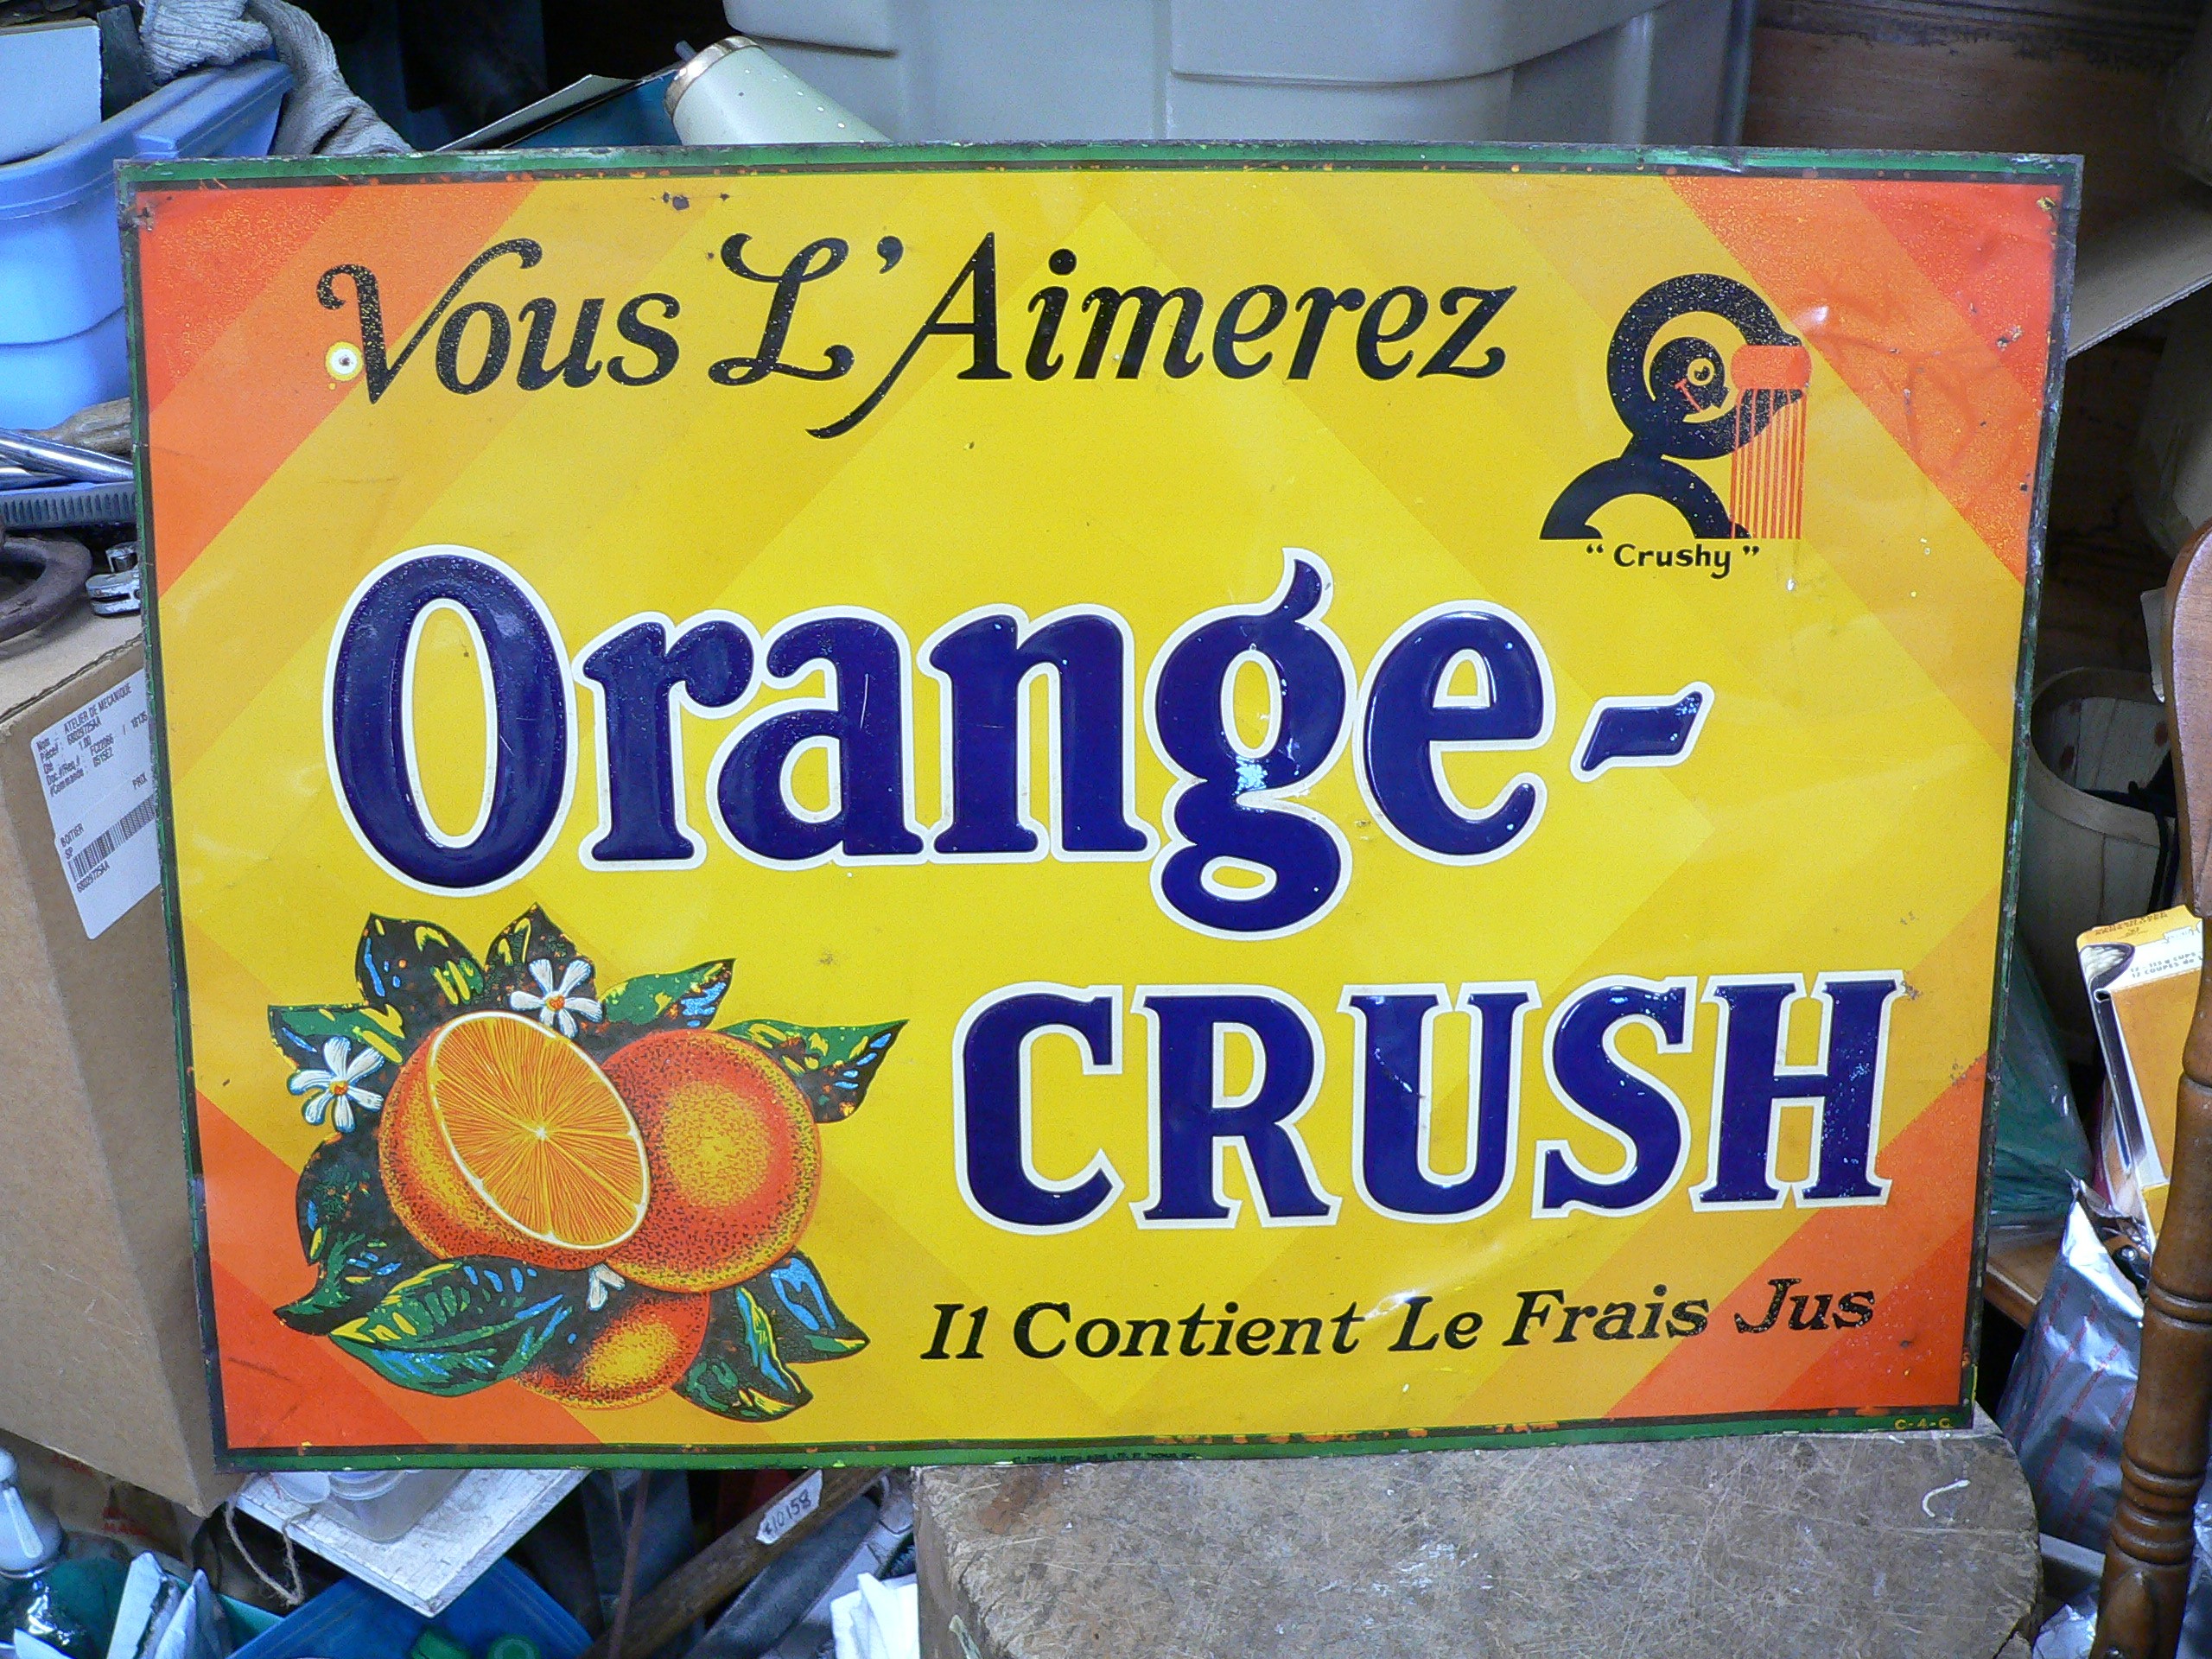 ultra rare enseigne orange crush 